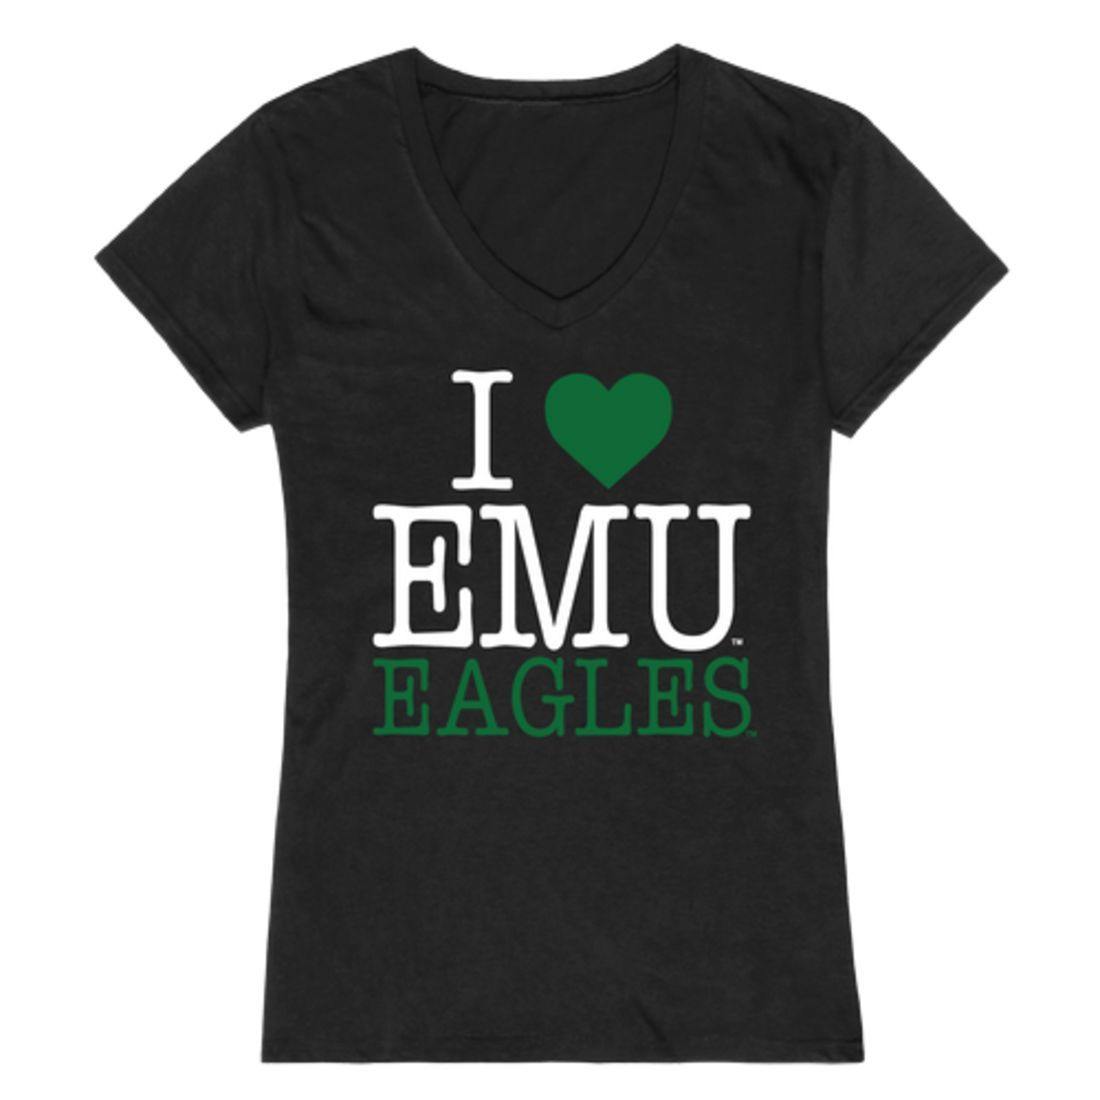 I Love EMU Eastern Michigan University Eagles Womens T-Shirt-Campus-Wardrobe